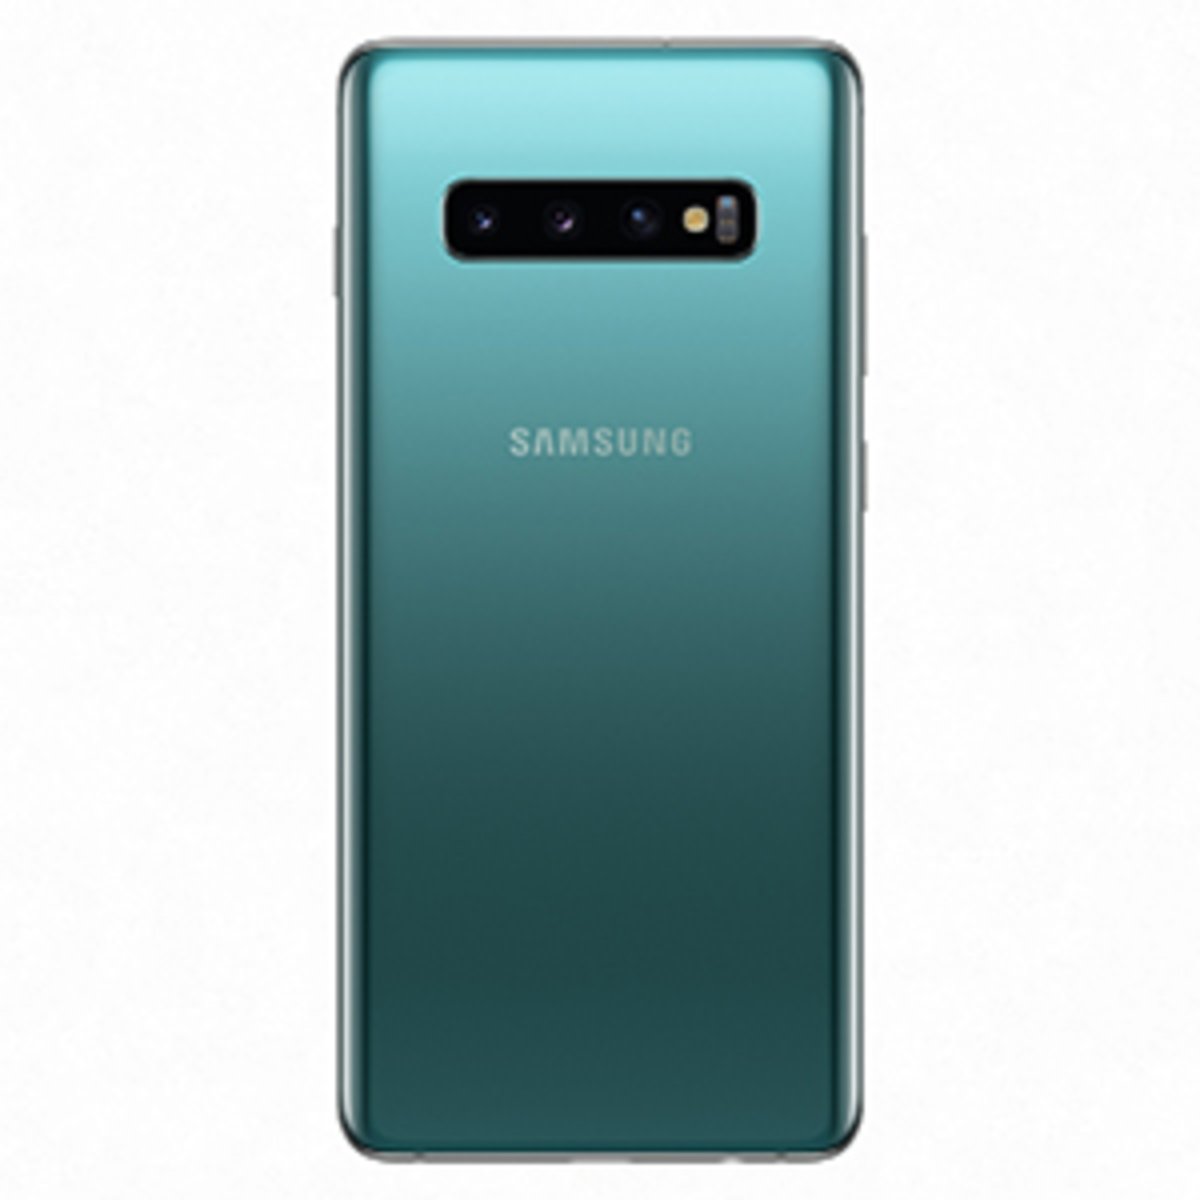 Samsung Galaxy S10+ SM-G975 128GB Green